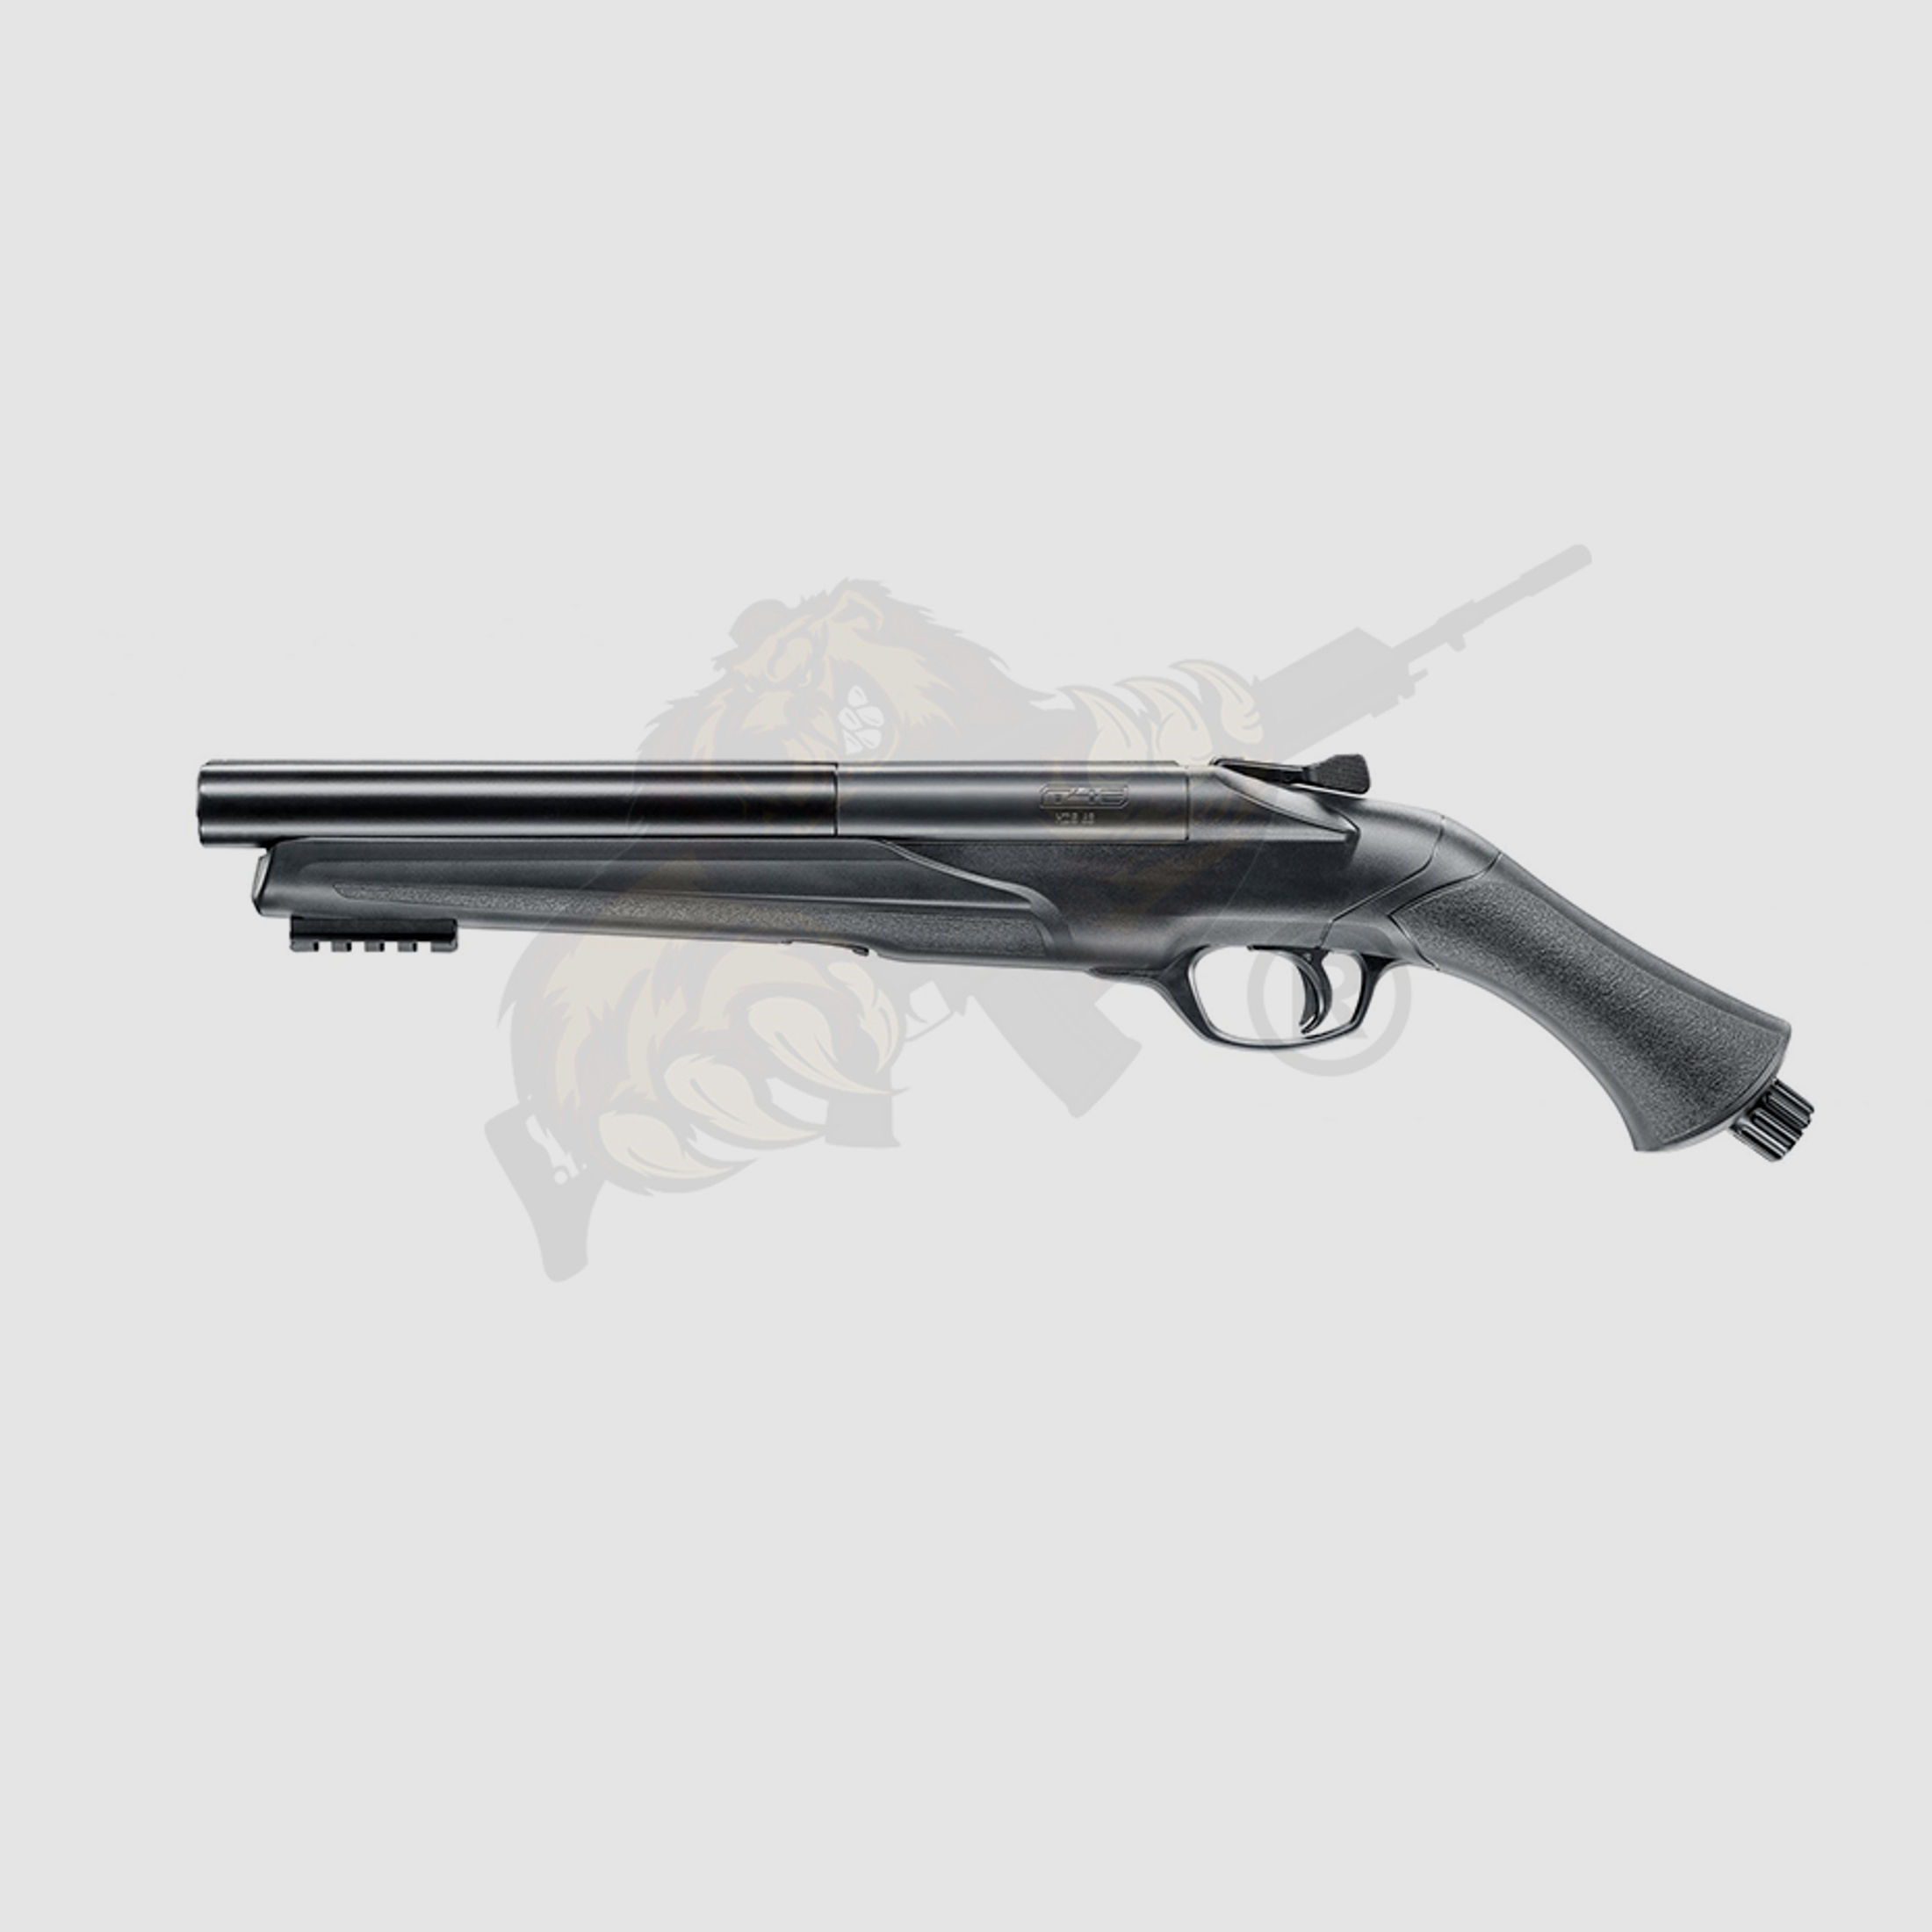 T4E HDS 68 (Home Defense Shotgun) Co2 kal. .68  - Umarex